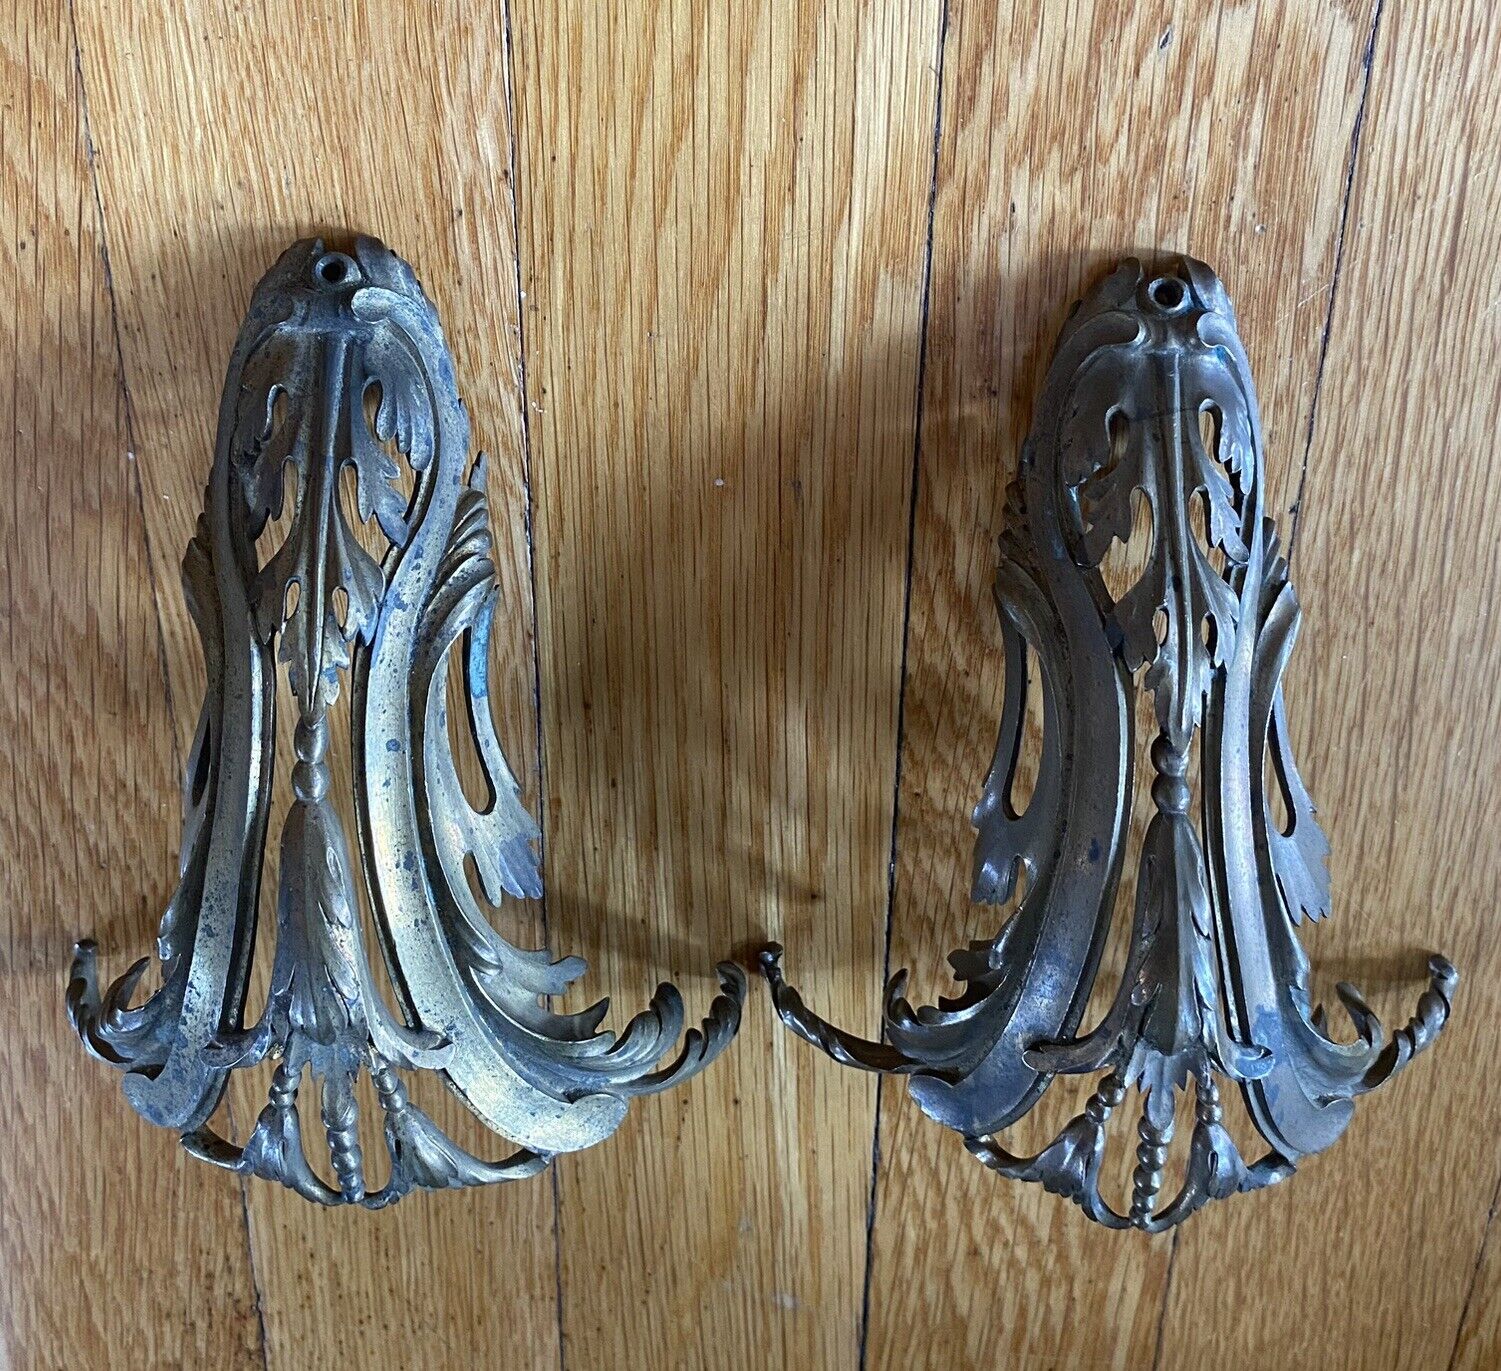 Antique Ormolu Feet/Legs For French Clock, Lamp, Garniture…Gilt Bronze Parts